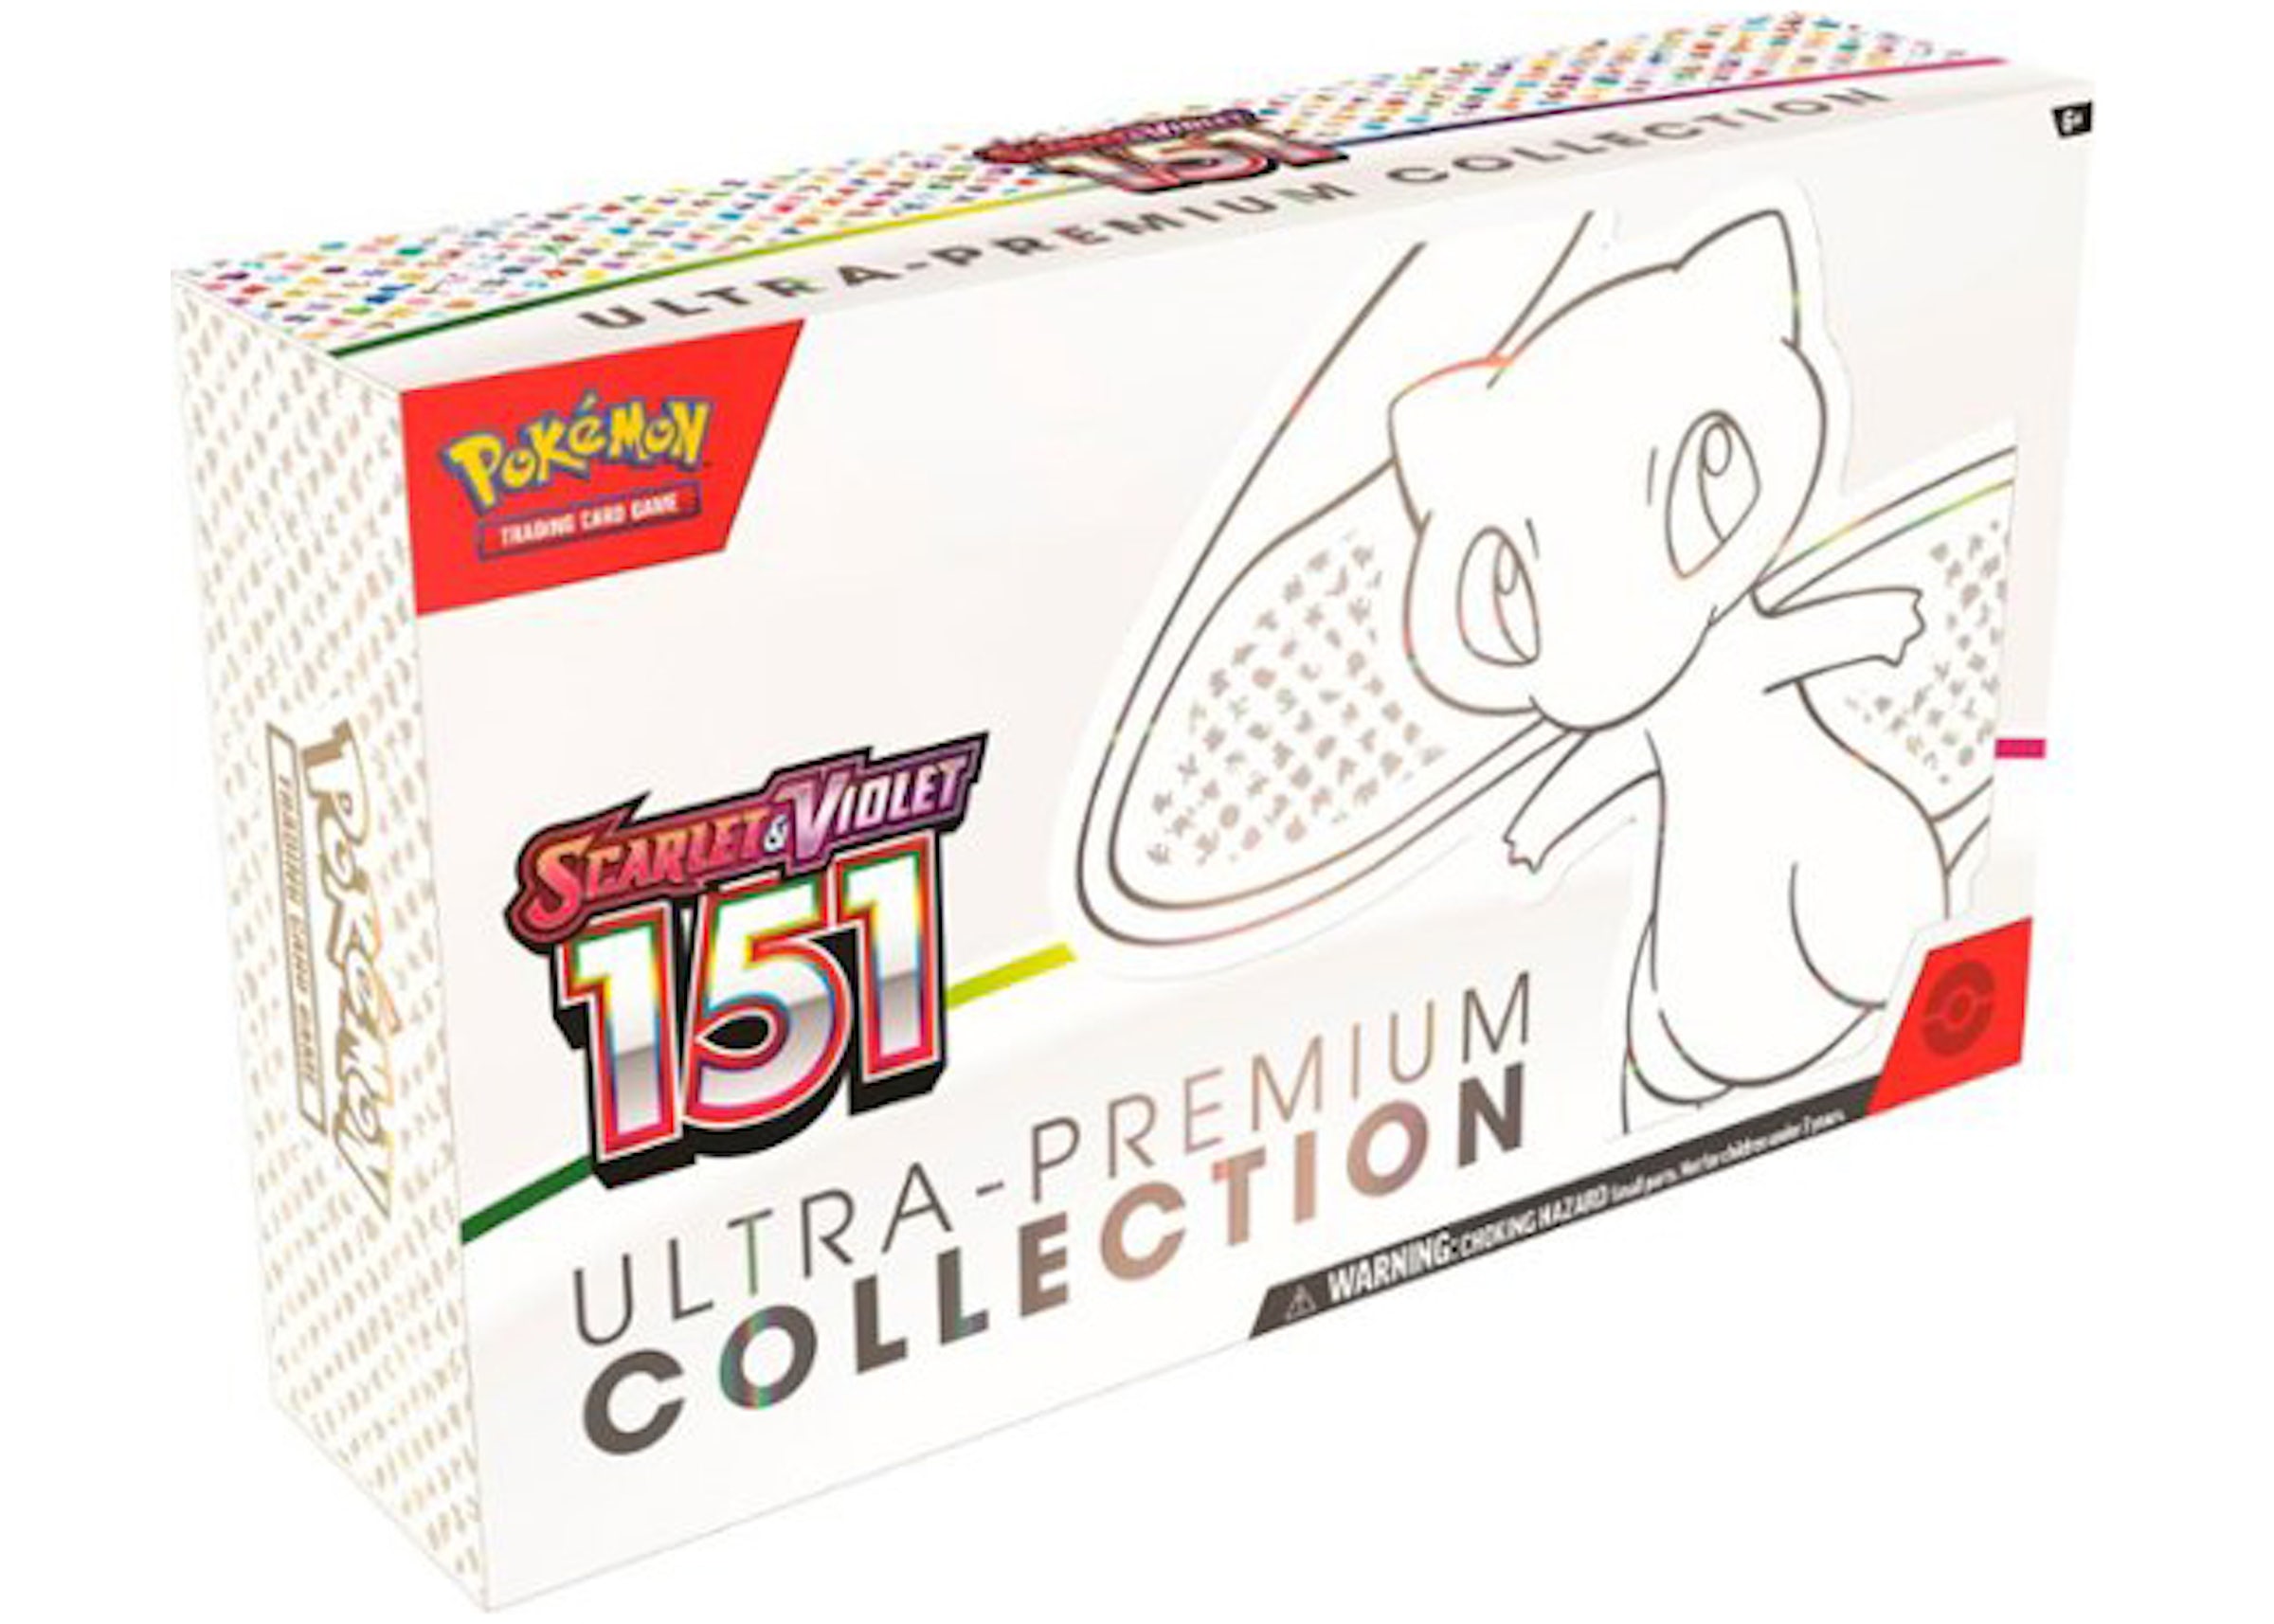 Pokemon Ultra Beasts Pheromosa-GX Premium Collection 